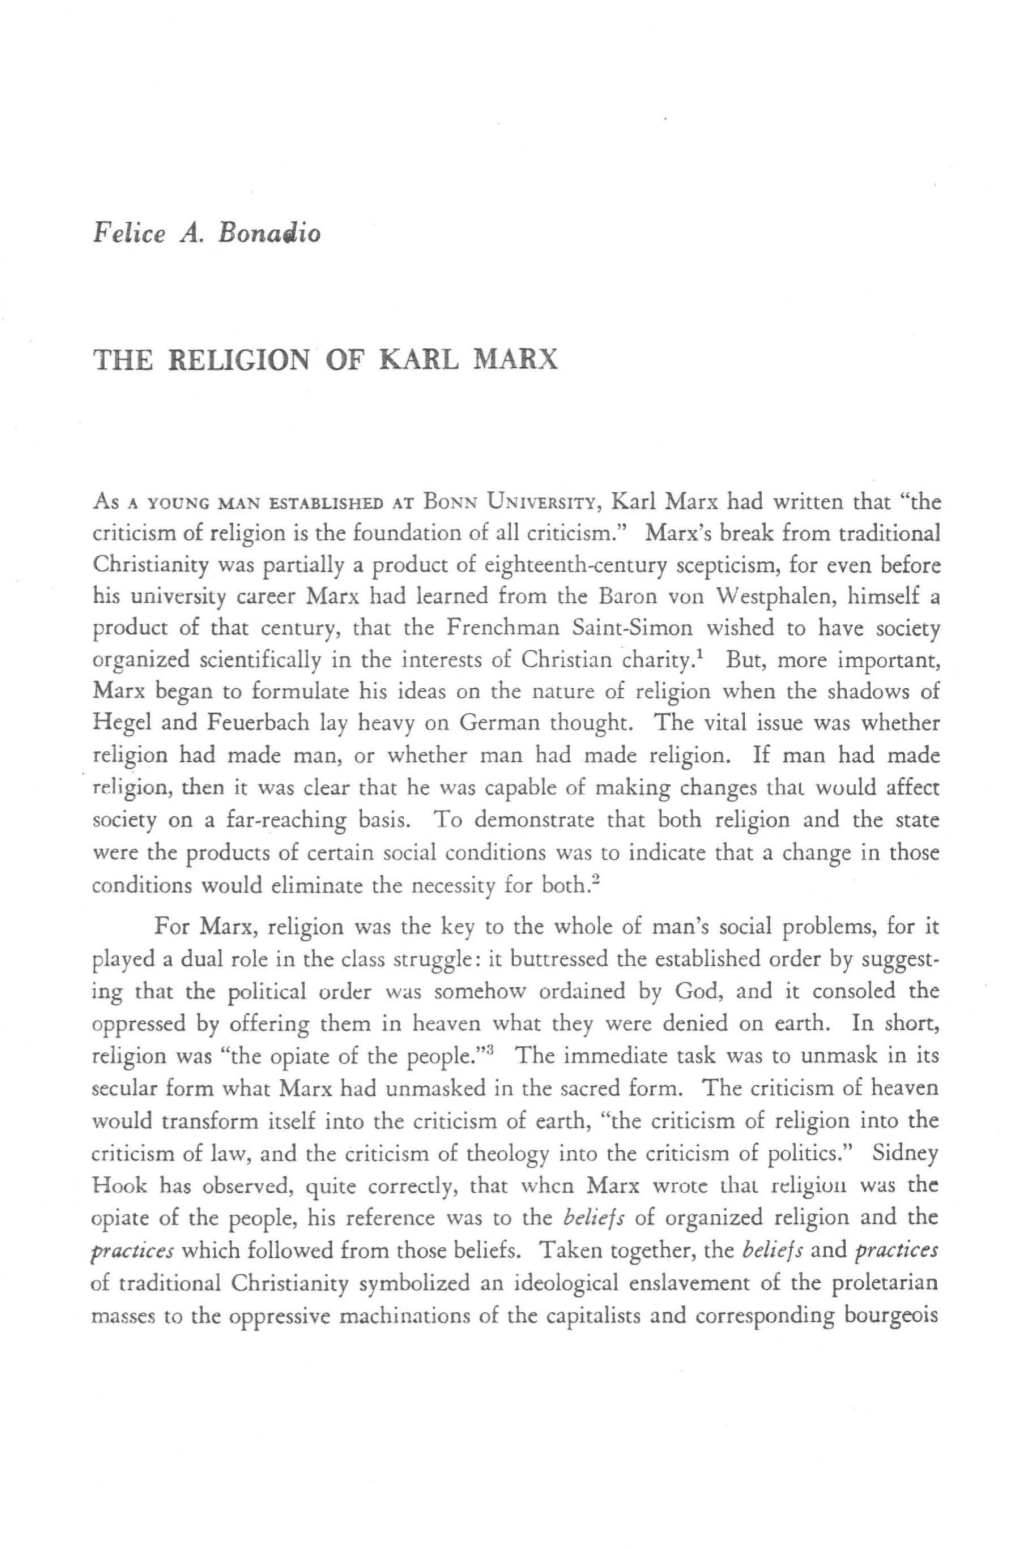 The Religion of Karl Marx